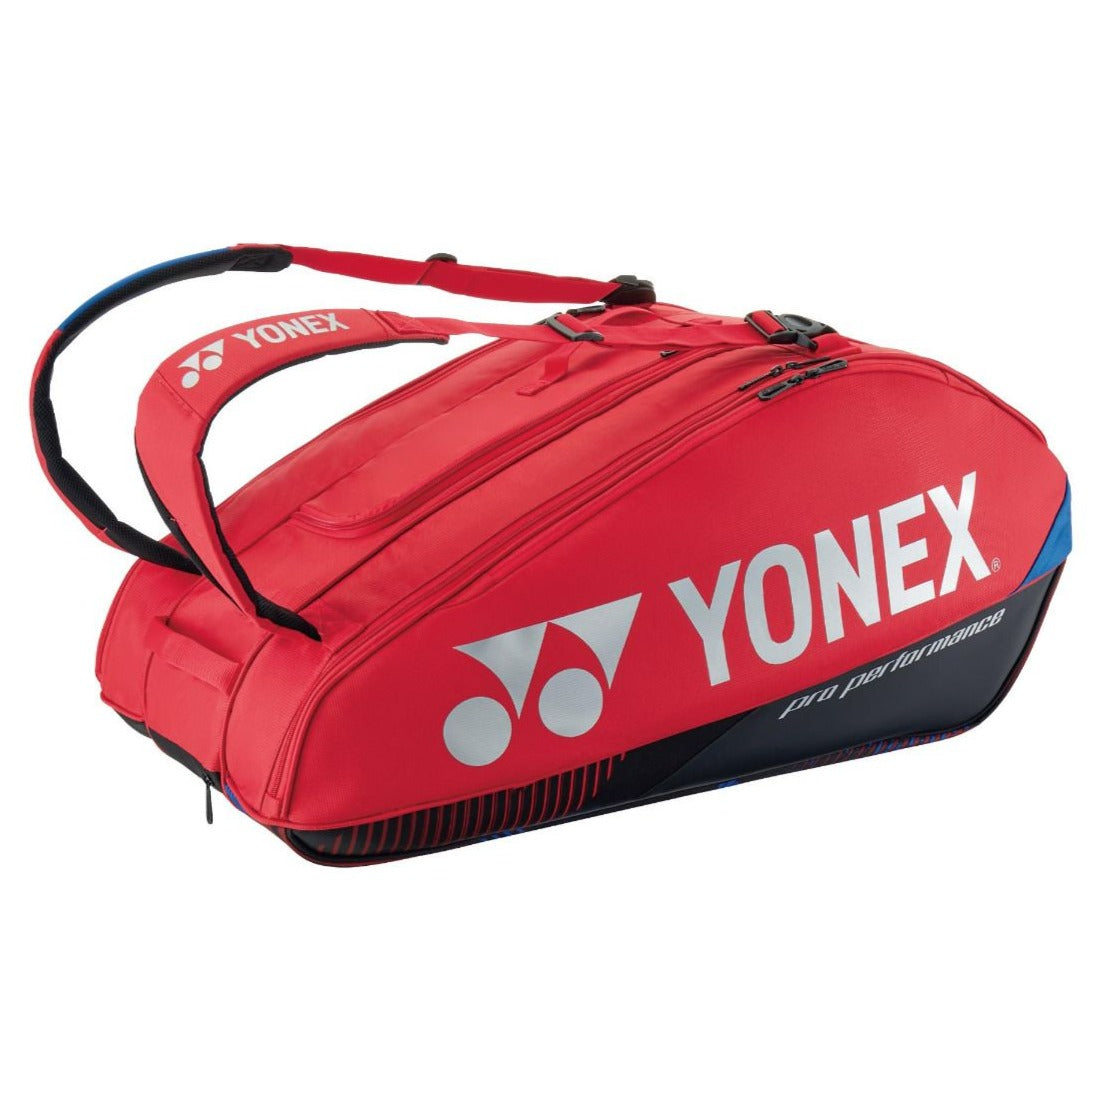 Yonex Racketbag 92429 scarlet red